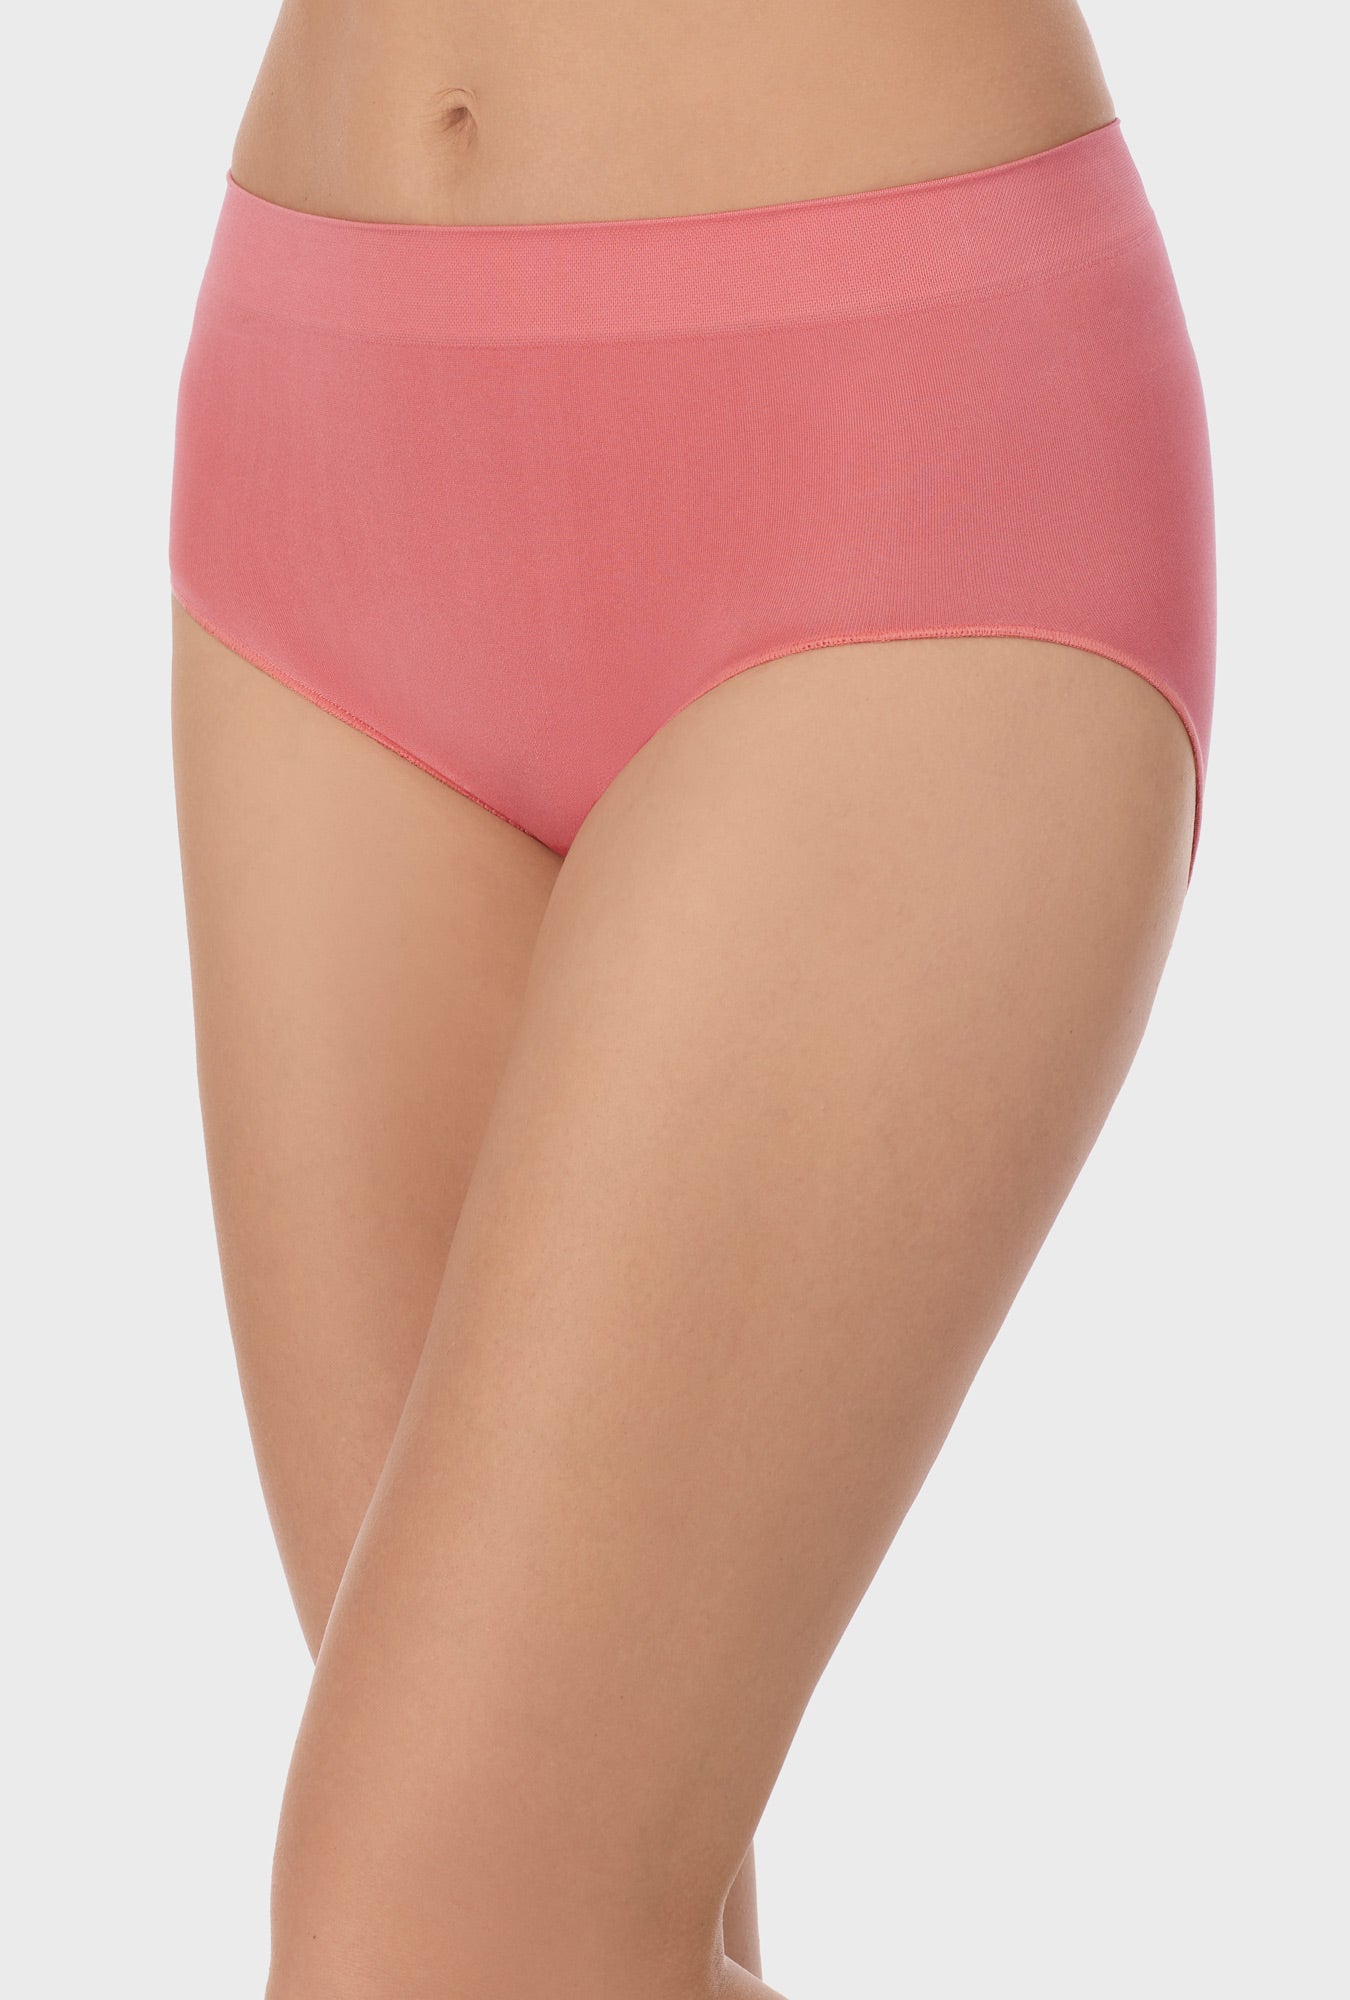 Carole Hochman Women's Underwear Silky Soft Seamless Full Coverage Modern Brief  Panties 5 Pack Multipack Regular & Plus Sizes - Small 